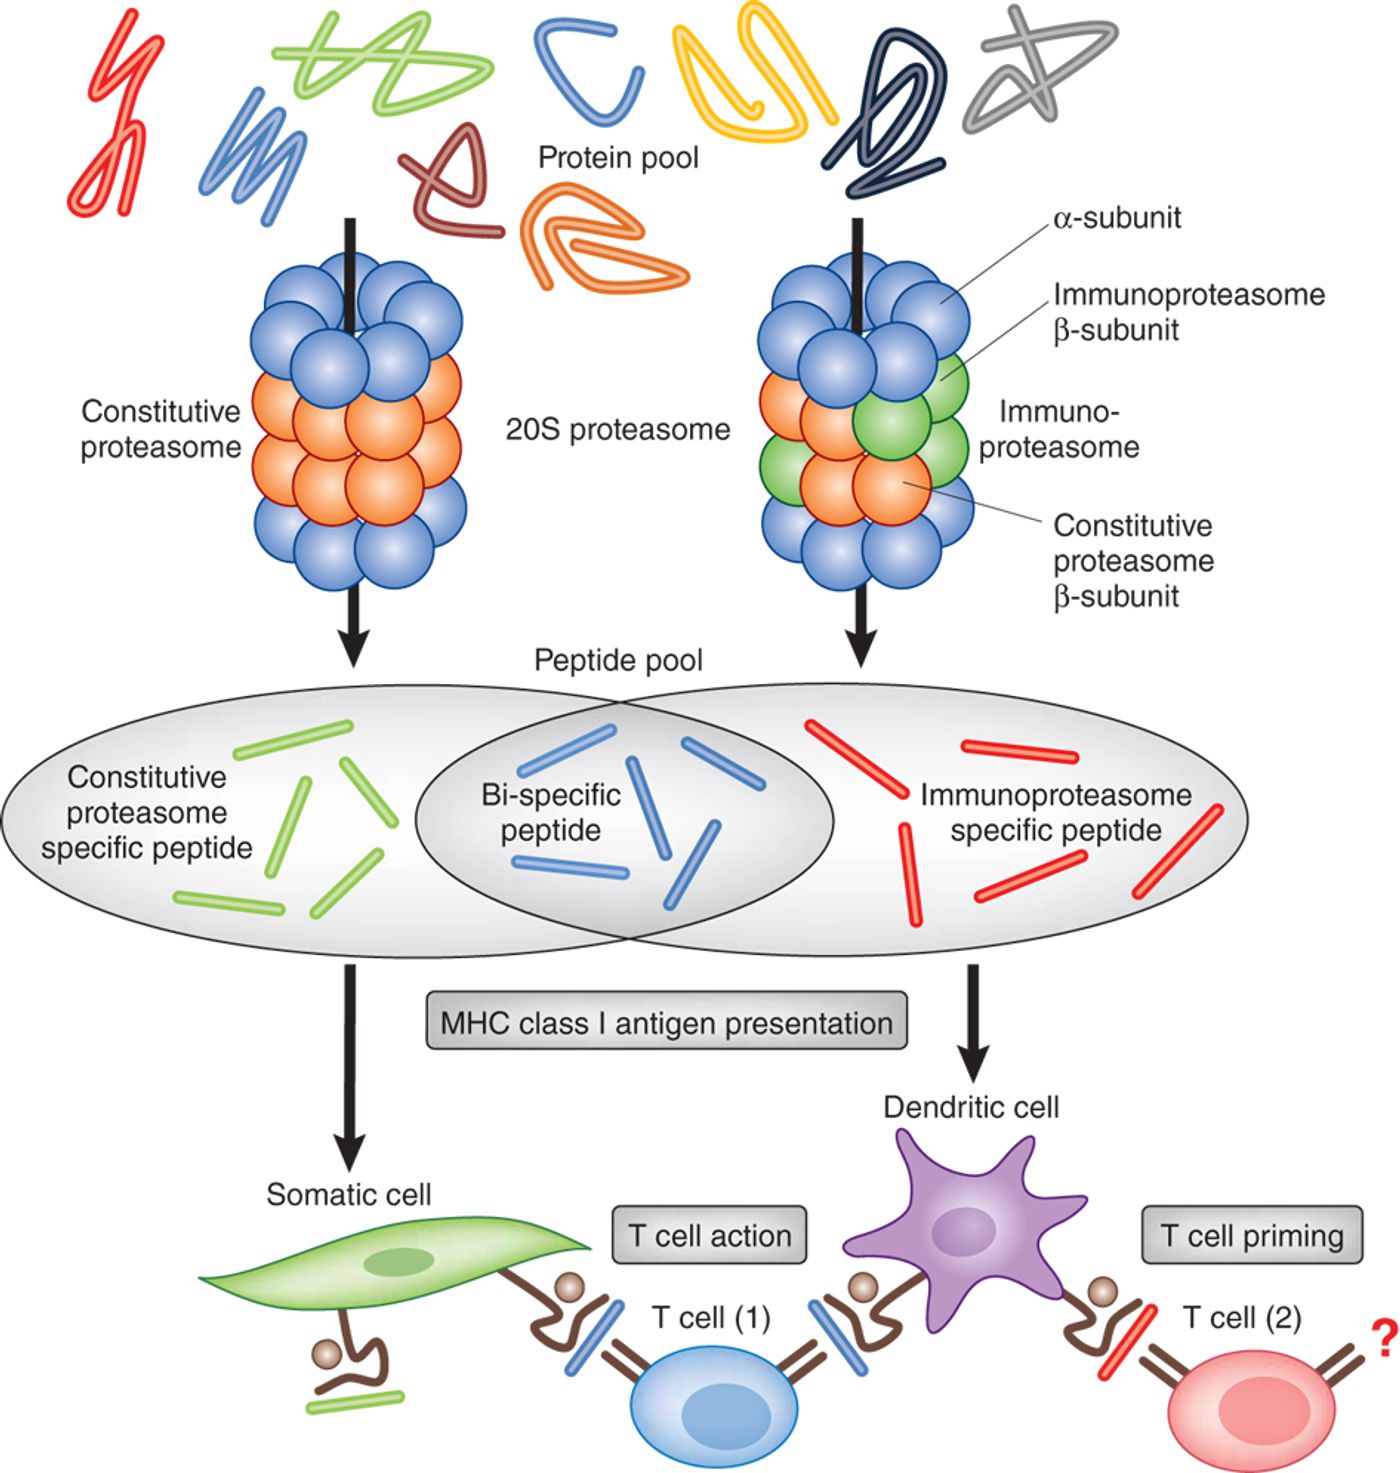 Immunoproteasome Function of the Adaptive Immune System